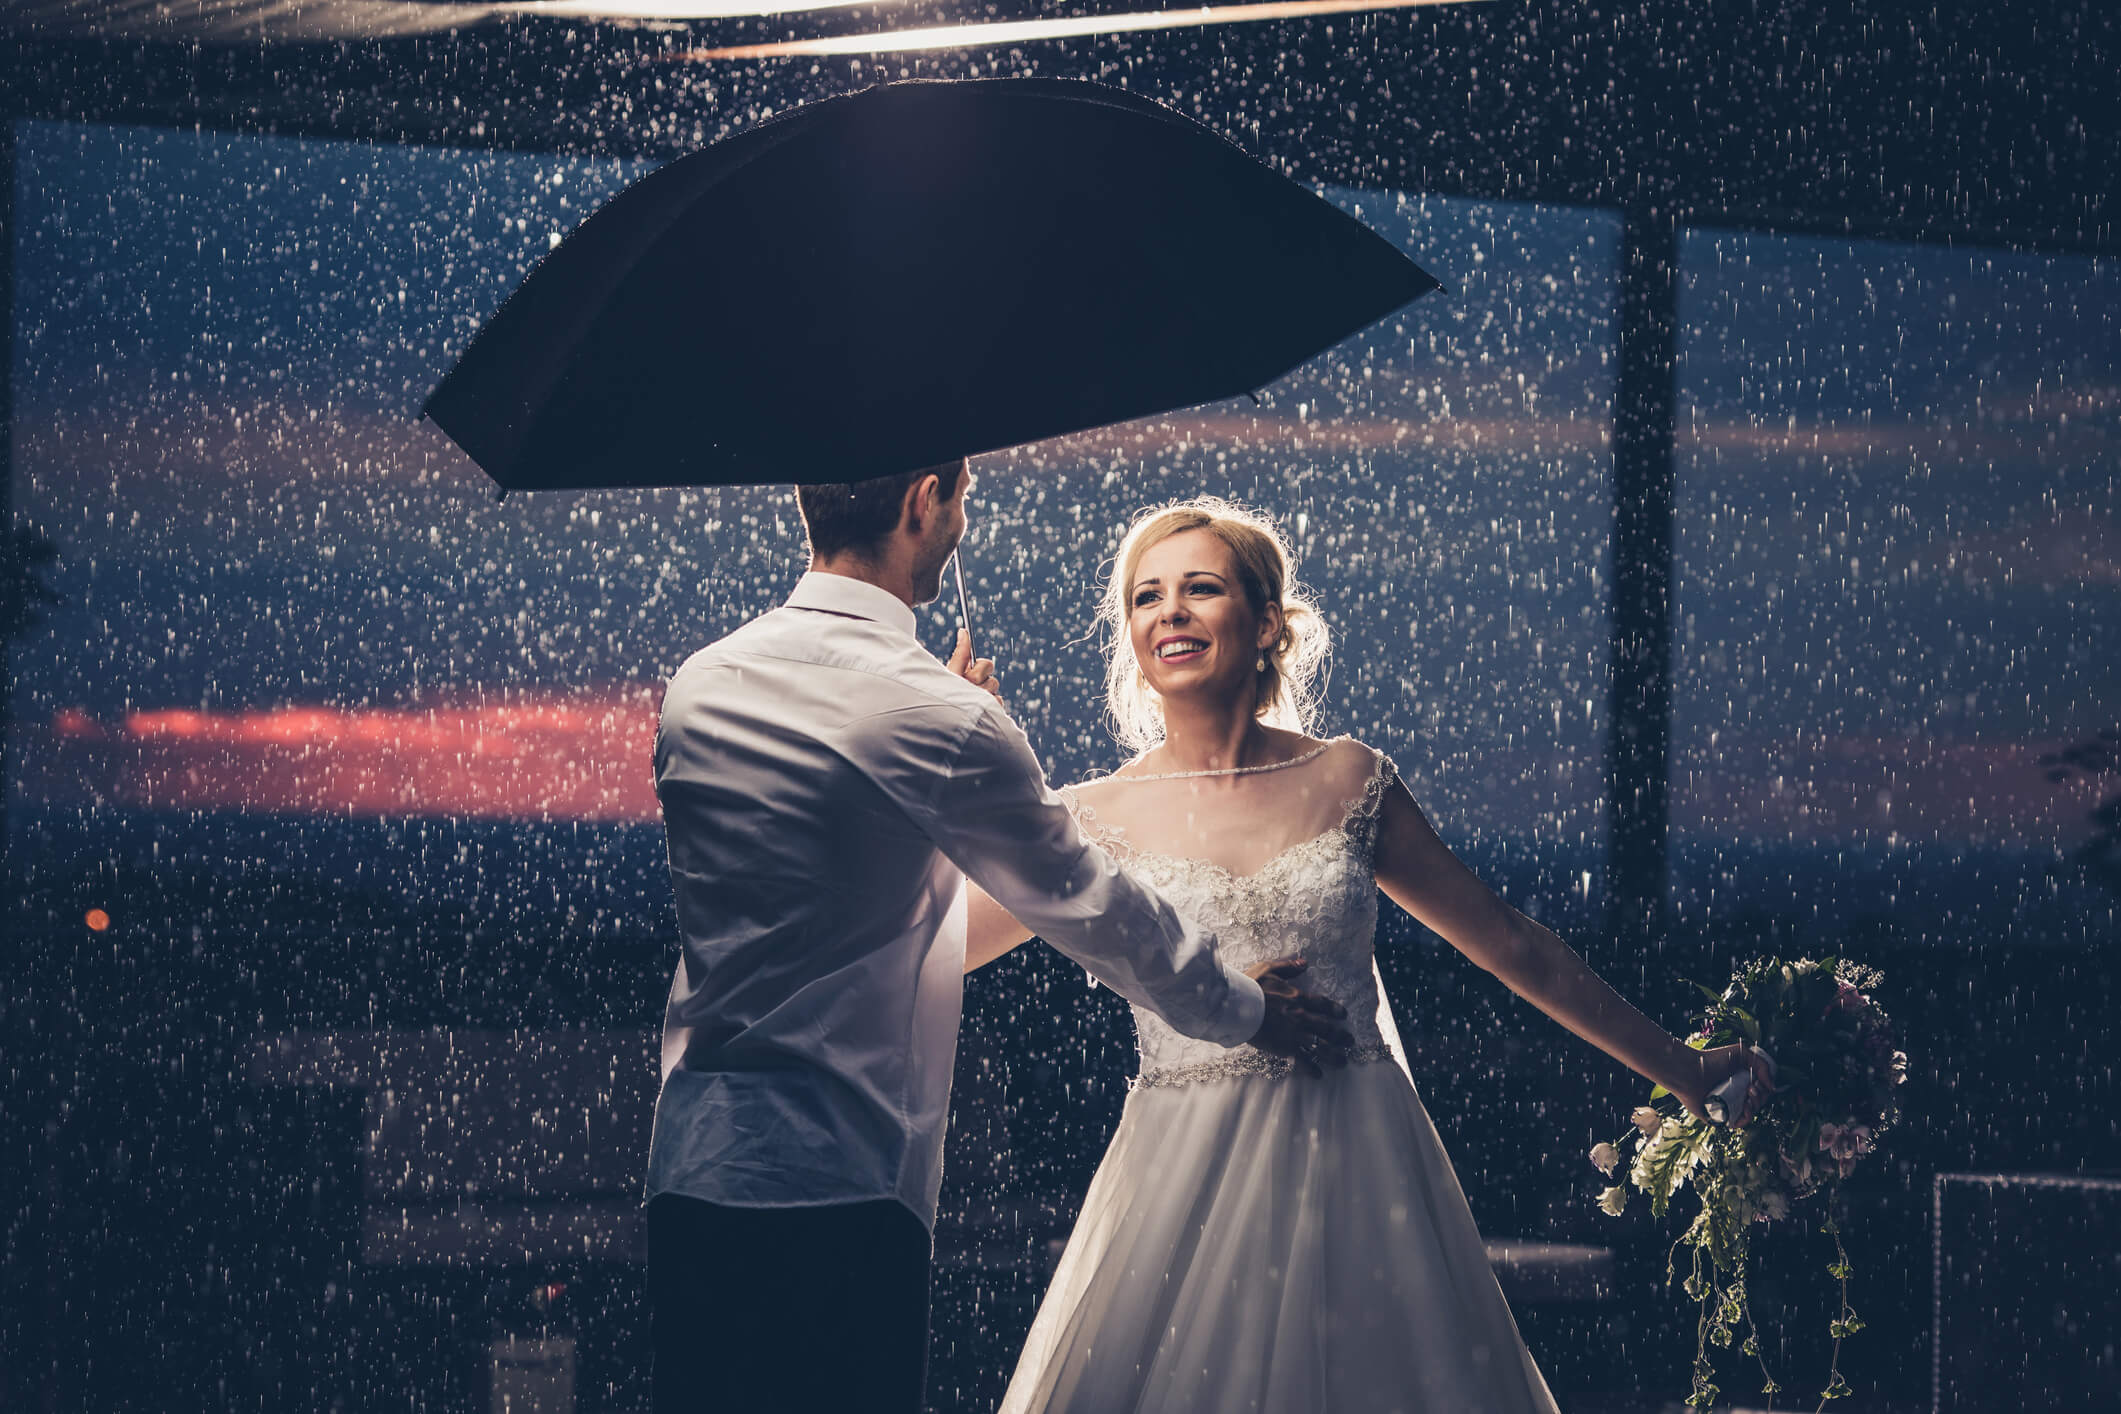 A newlywed couple under an umbrella